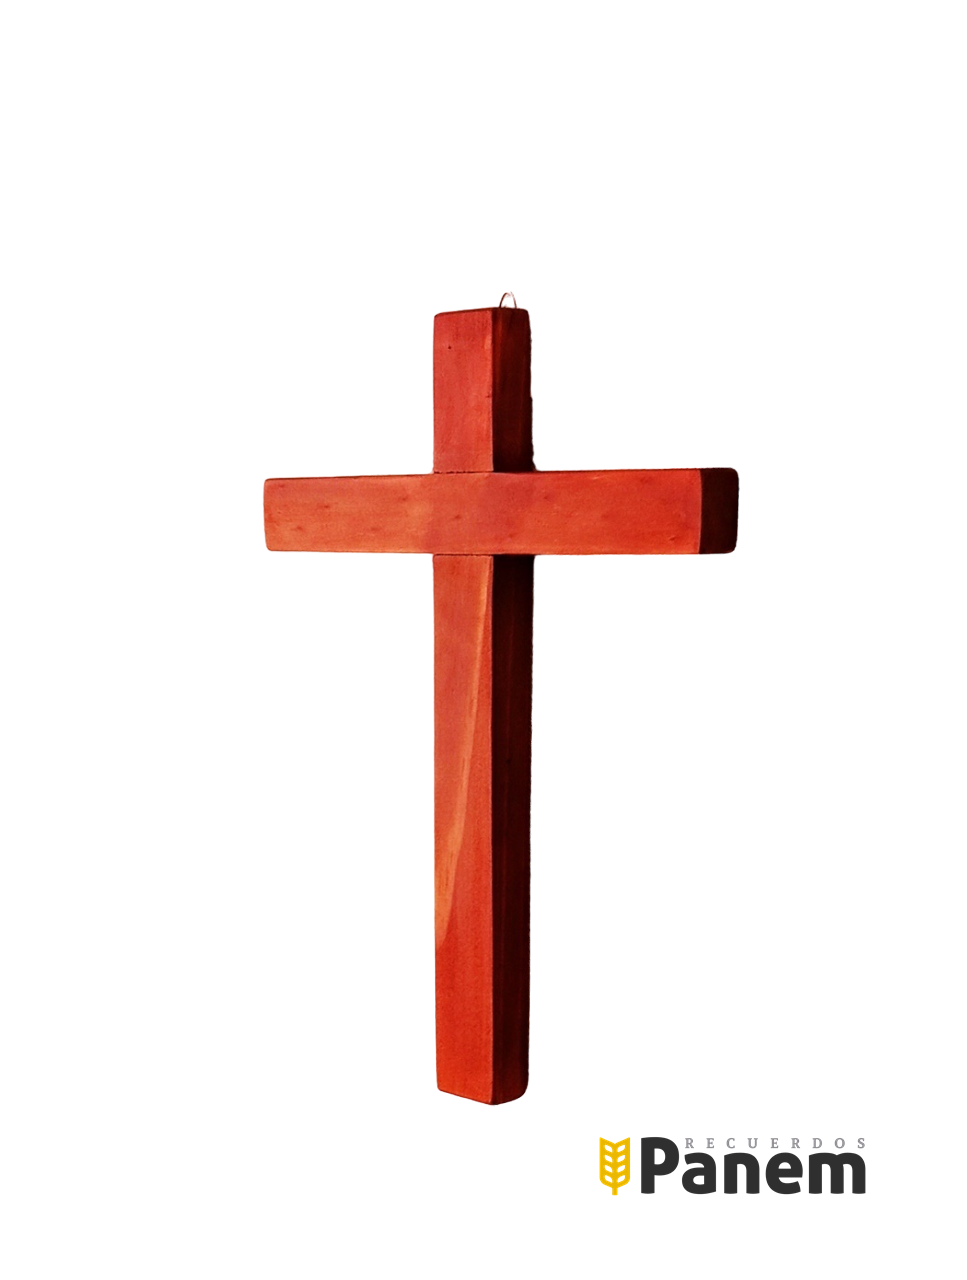 Cruz de madera con cordon - Recuerdos Panem